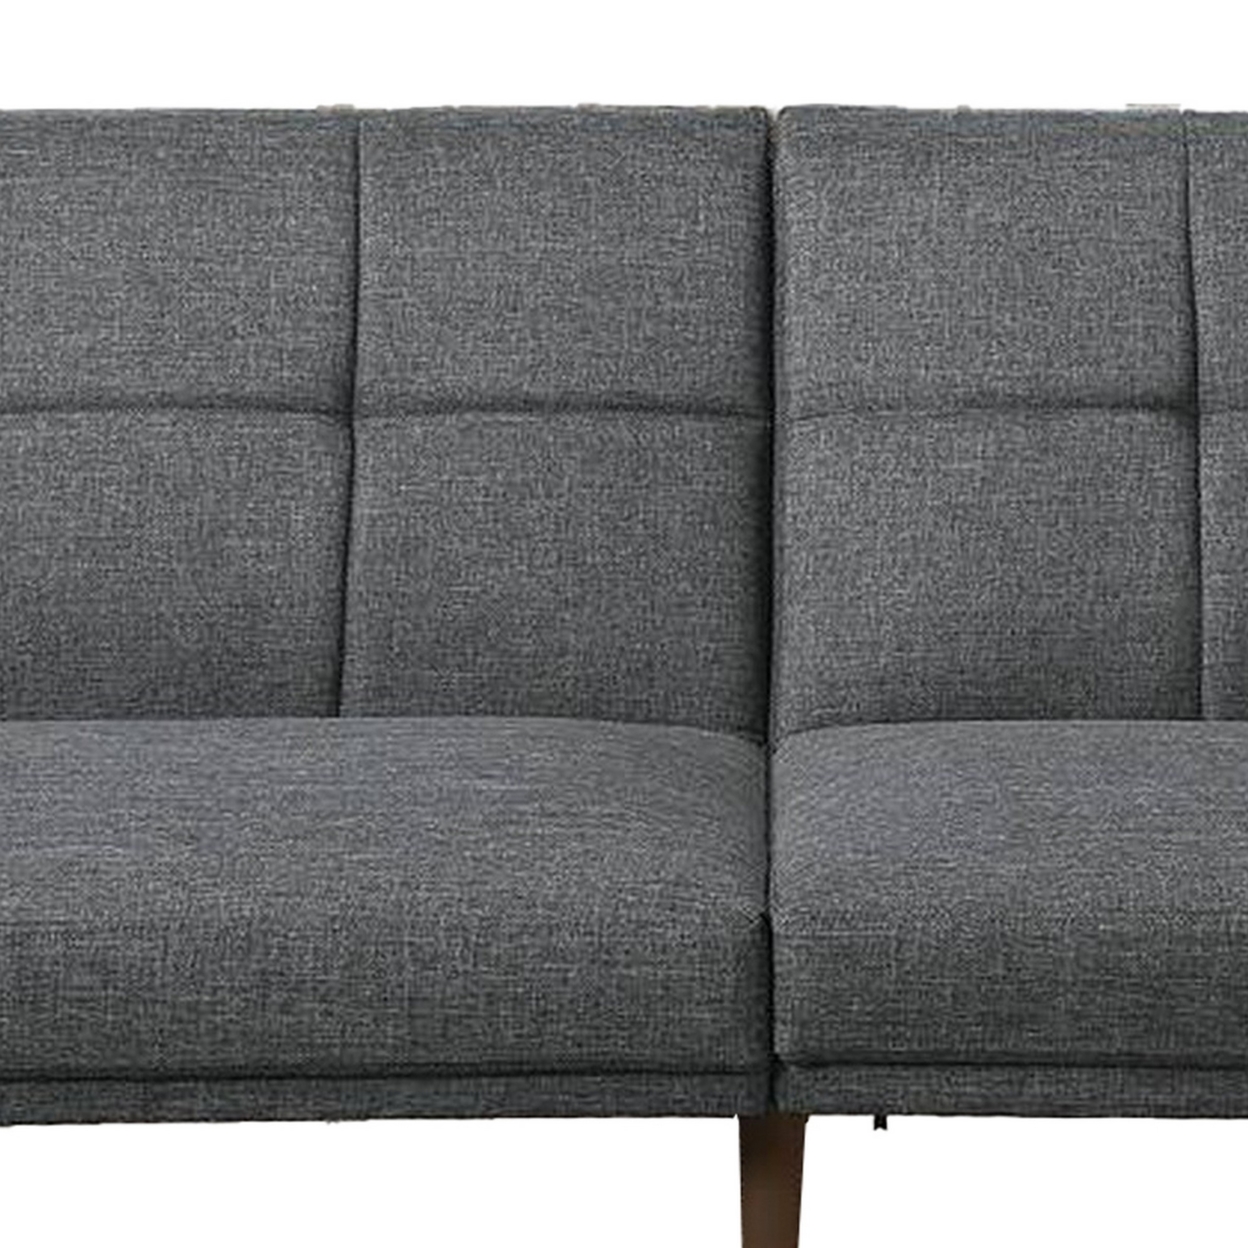 Fabric Adjustable Sofa With Square Tufted Back, Light Gray- Saltoro Sherpi